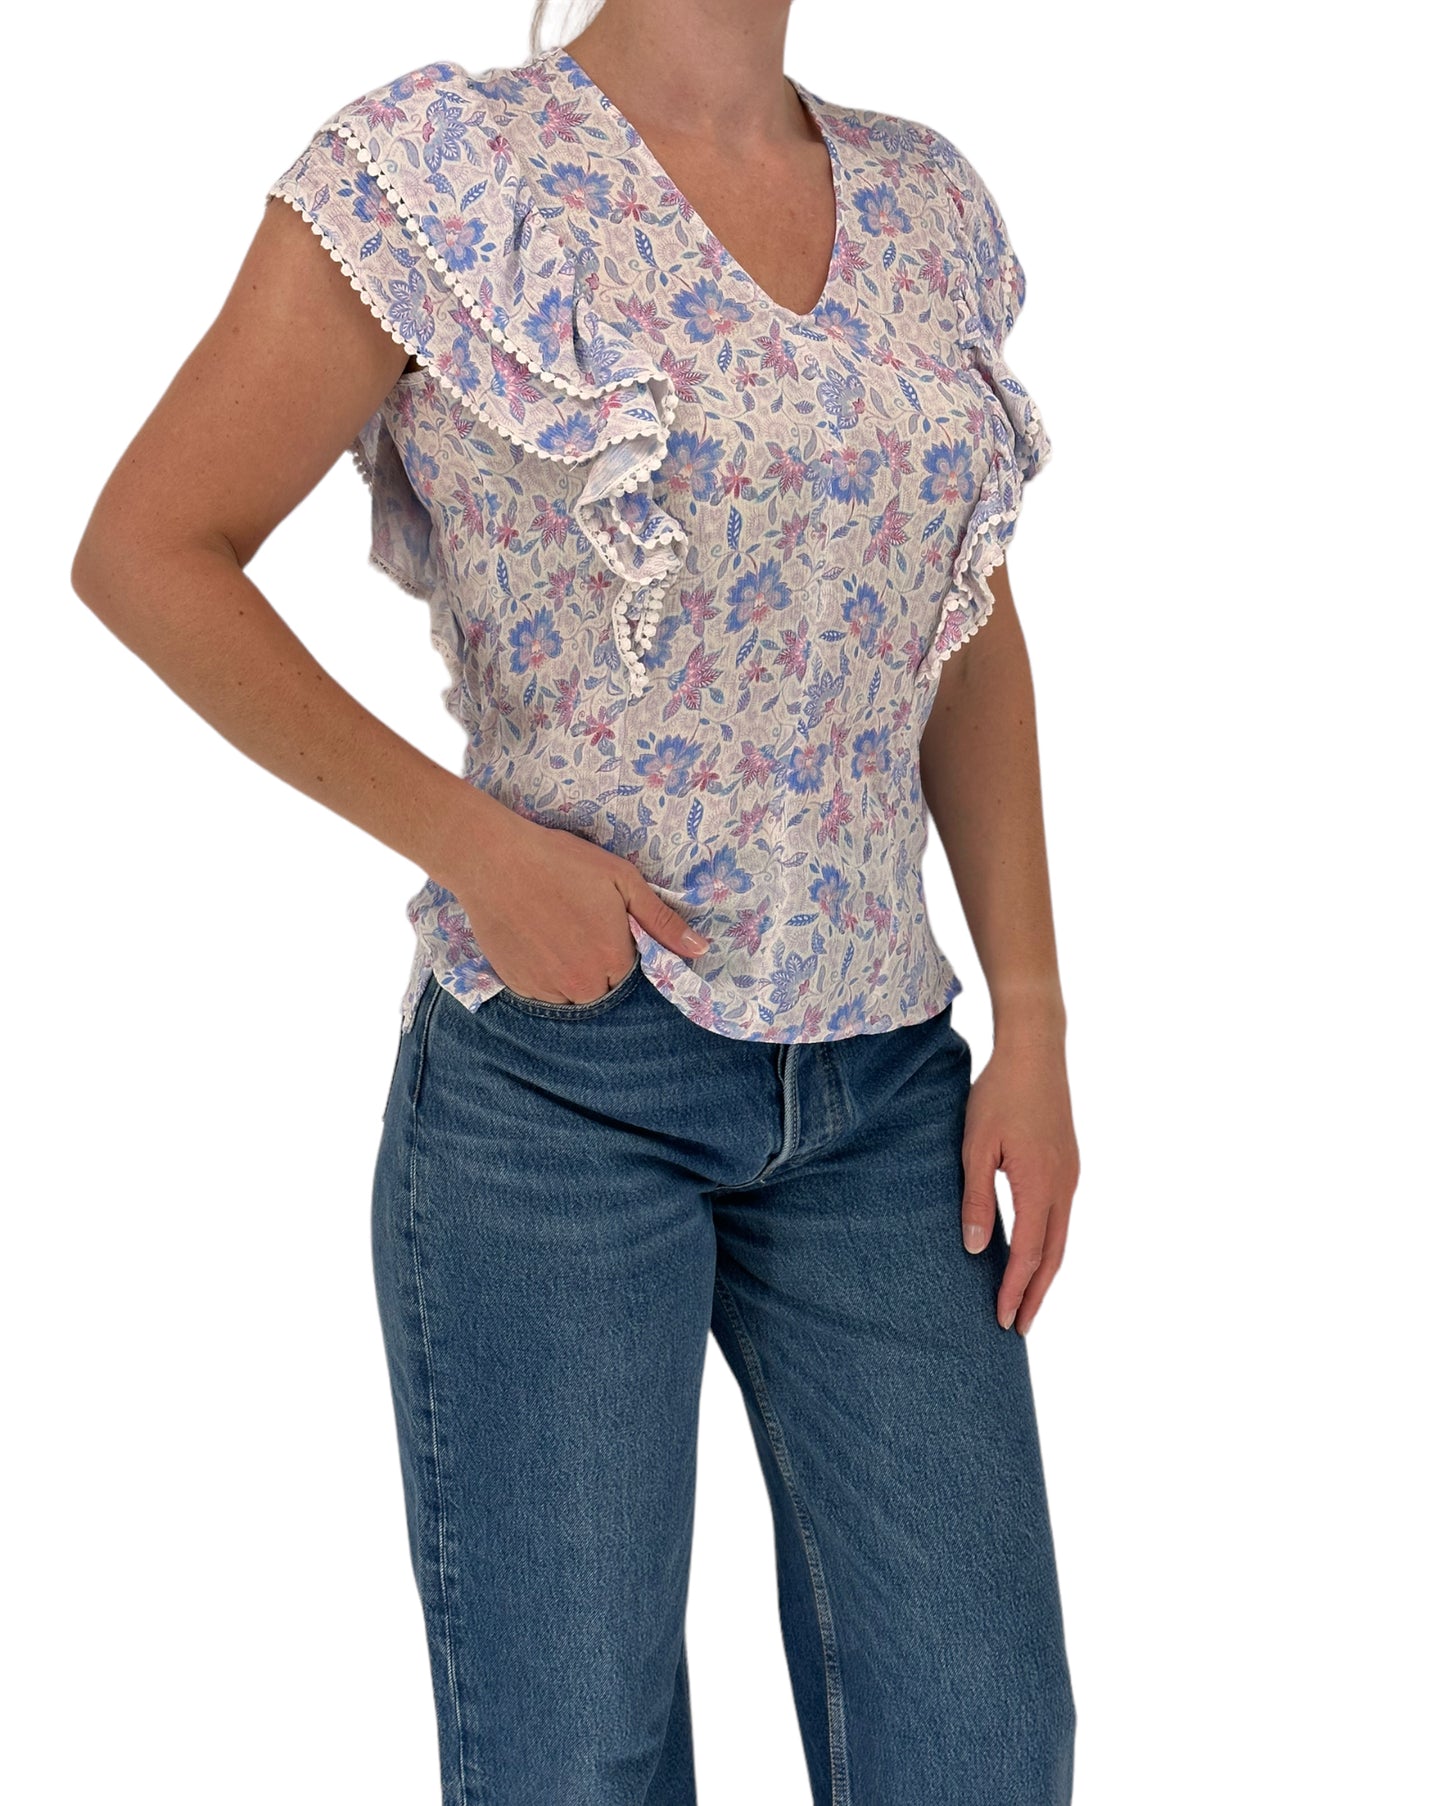 Doillon printed blouse